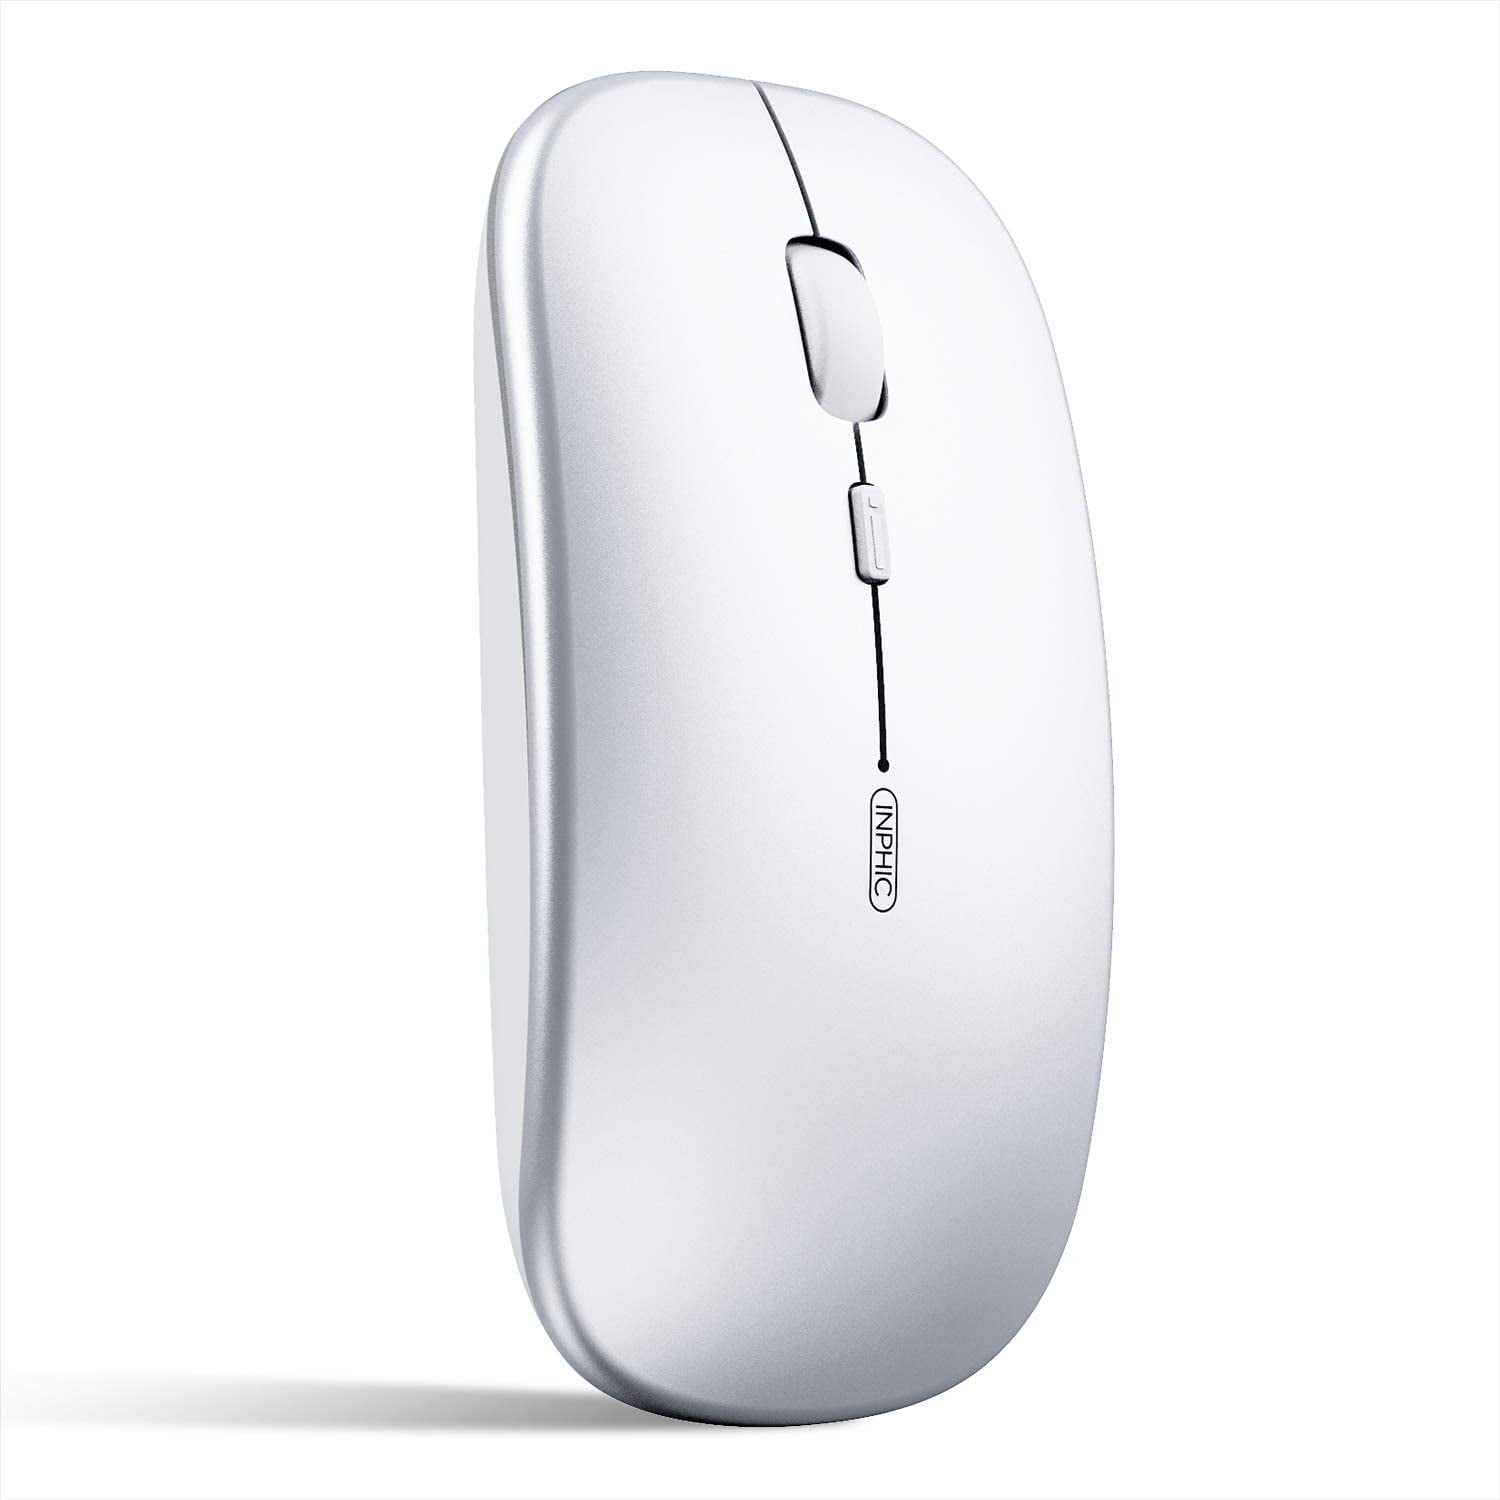 Blå Ooze Assassin Bluetooth Mouse Silent, Wireless Mouse Bluetooth 5.0/3.0 Dual Mode (No USB  Receiver), Mini 1600DPI Portable Computer Mice for Laptop PC Mac,iPadOS,  3-Button,12-Month Battery Life, - Walmart.com